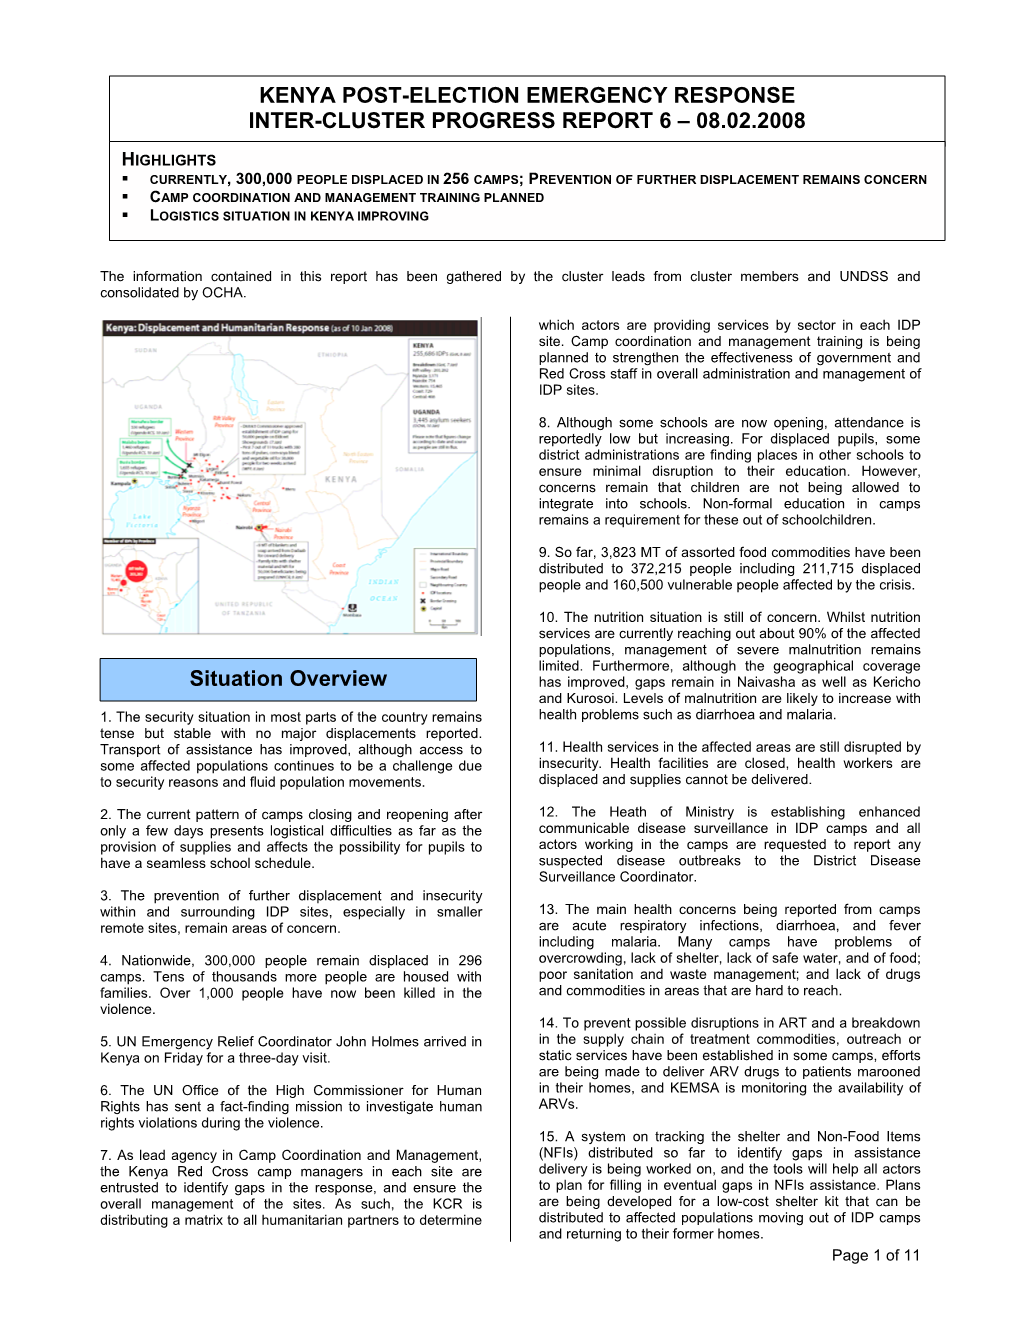 Kenya Post-Election Emergency Response Inter-Cluster Progress Report 6 – 08.02.2008